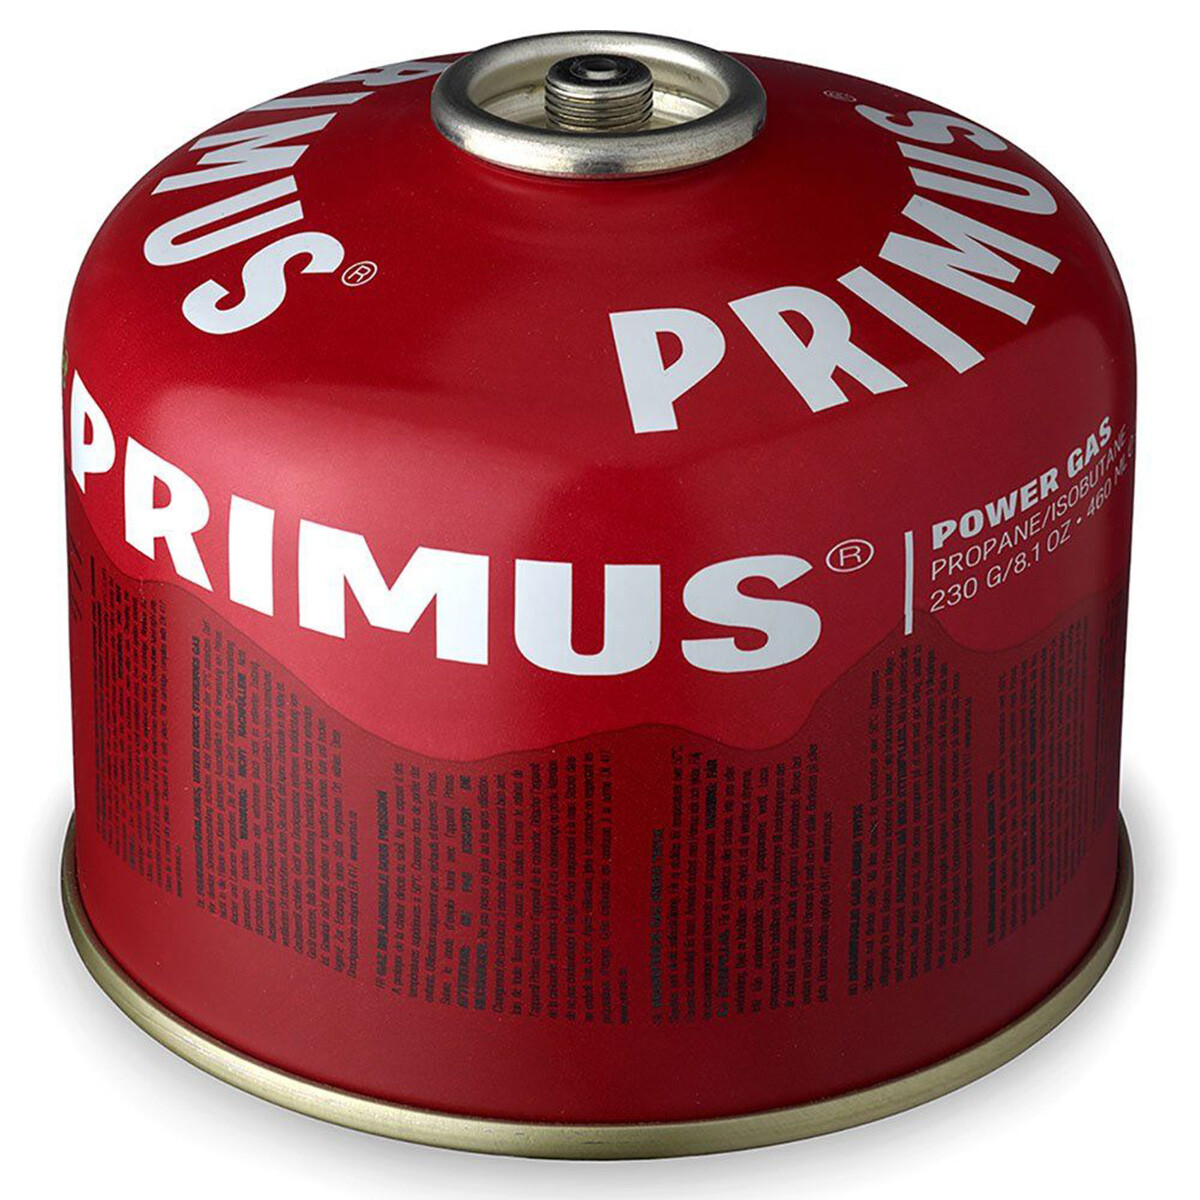 Se Primus Power Gas 230 gram L2 hos Specialbutikken